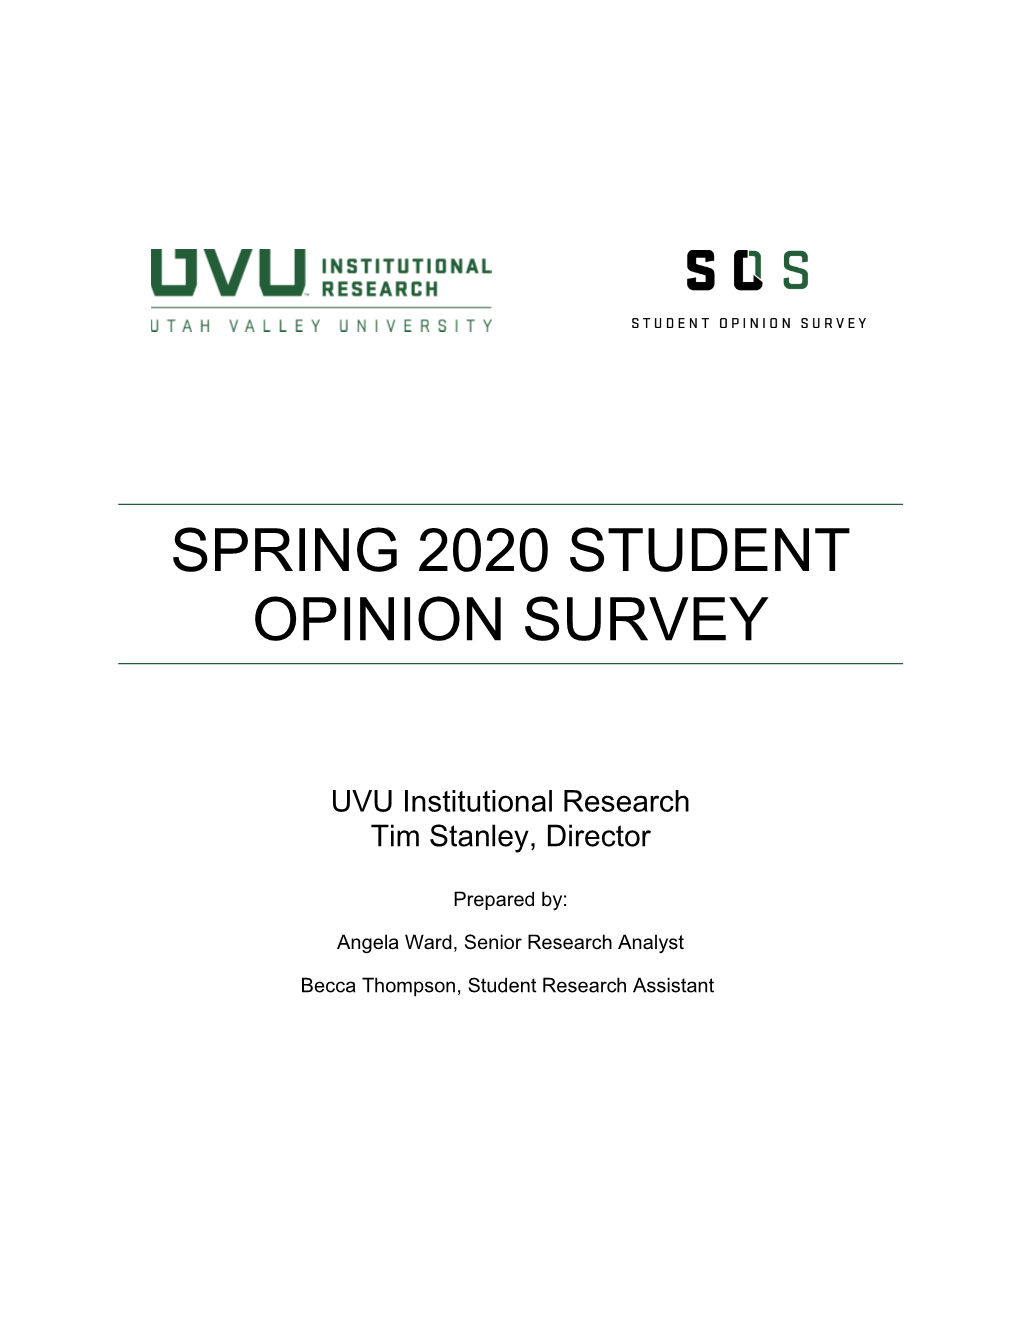 Spring 2020 Student Opinion Survey